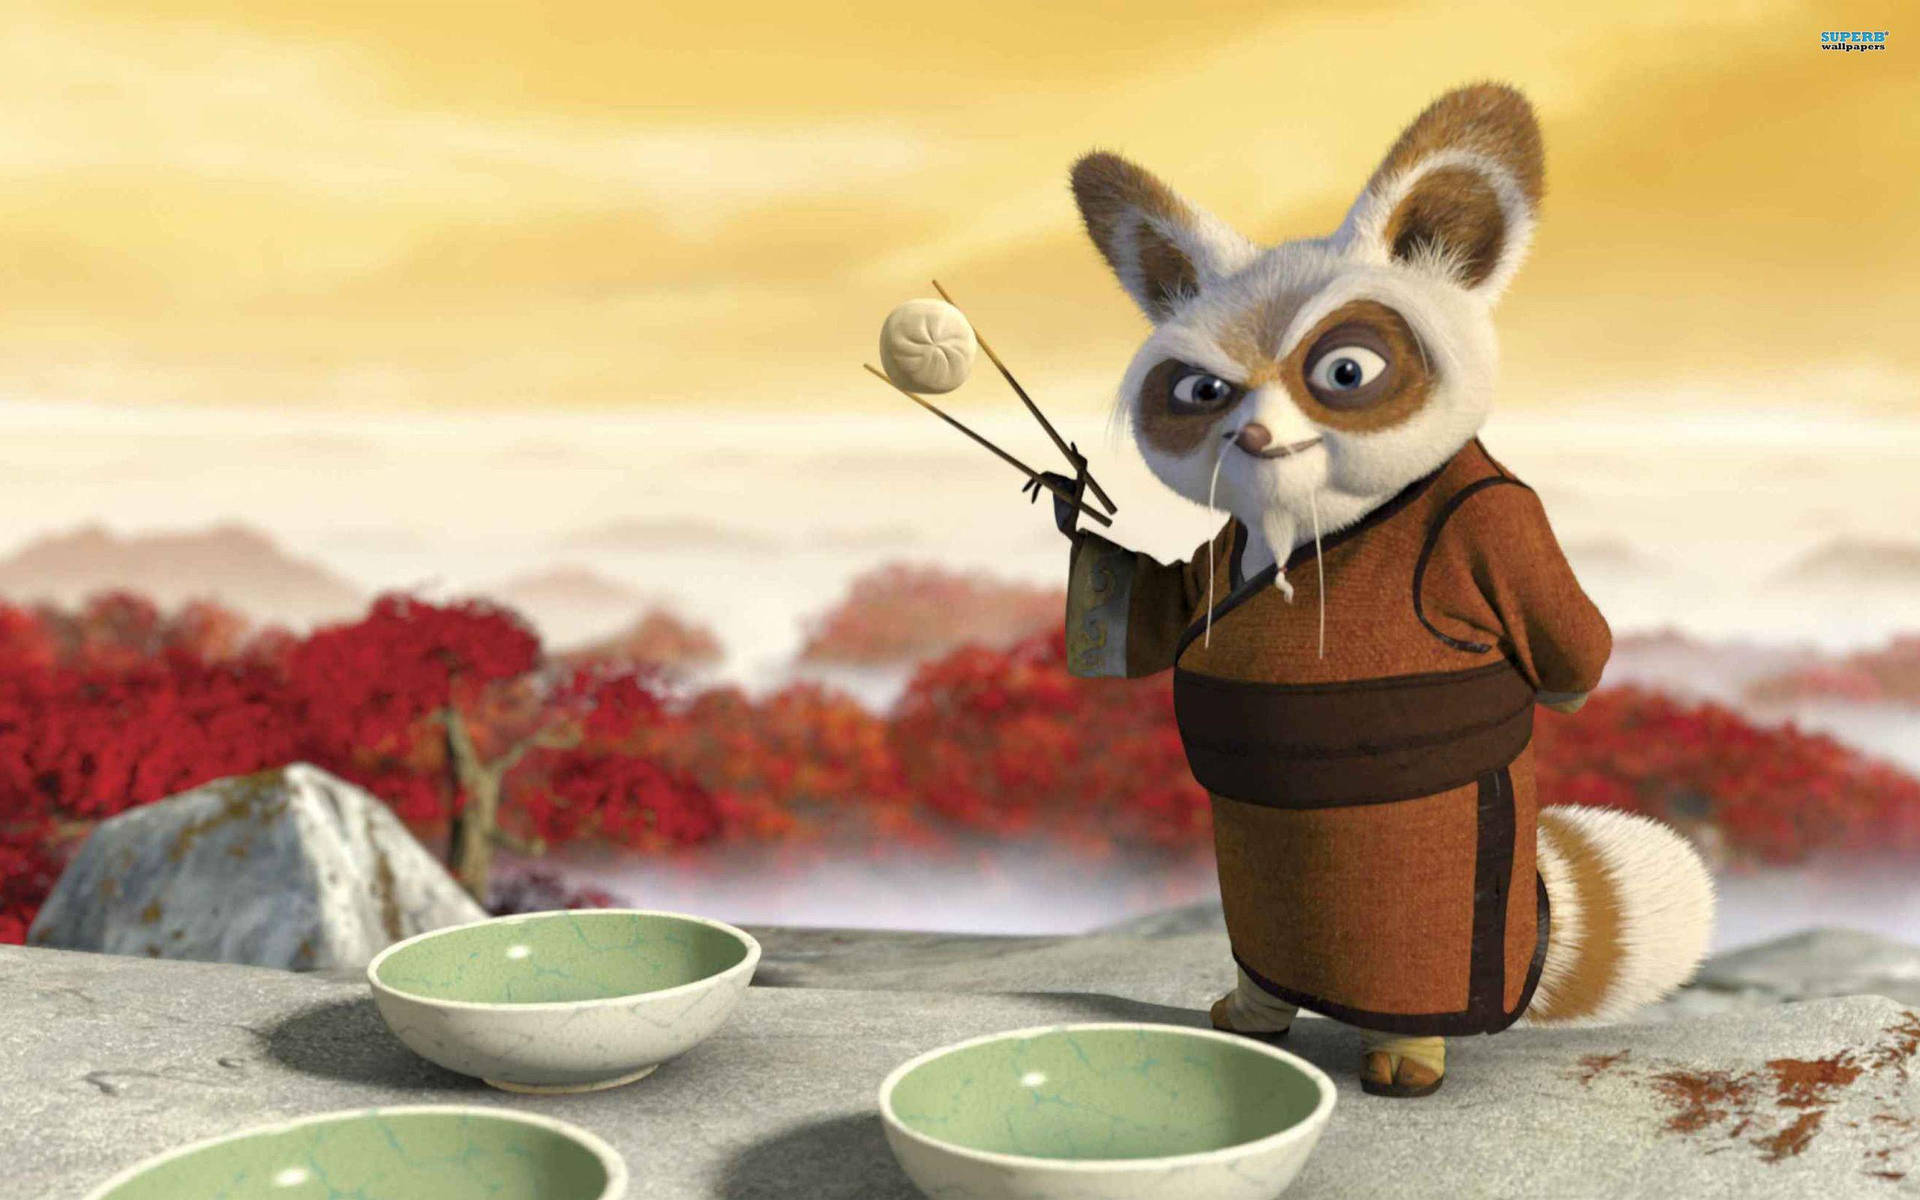 Master Shifu Demonstrating Incredible Agility With Chopsticks In Kung Fu Panda. Background